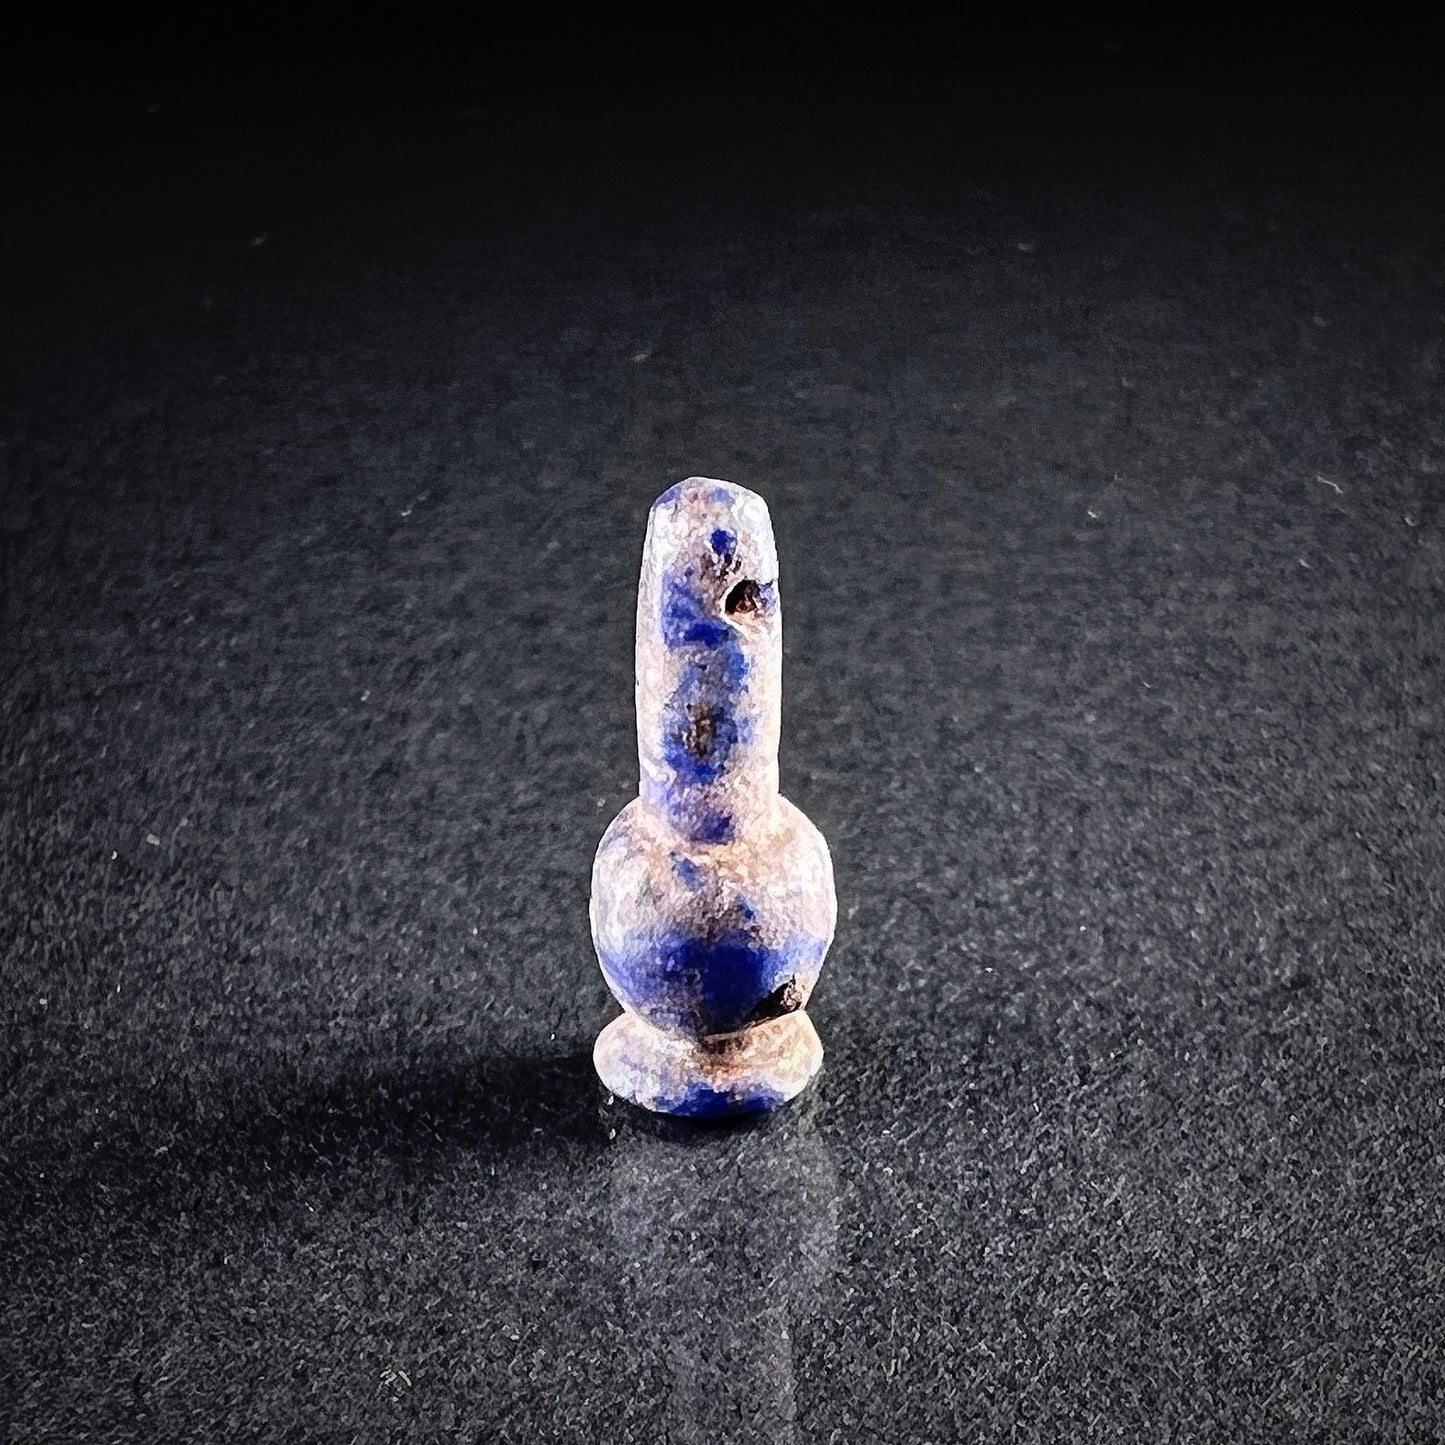 Ancient Egyptian poppy amulet, lapis lazuli - single piece 